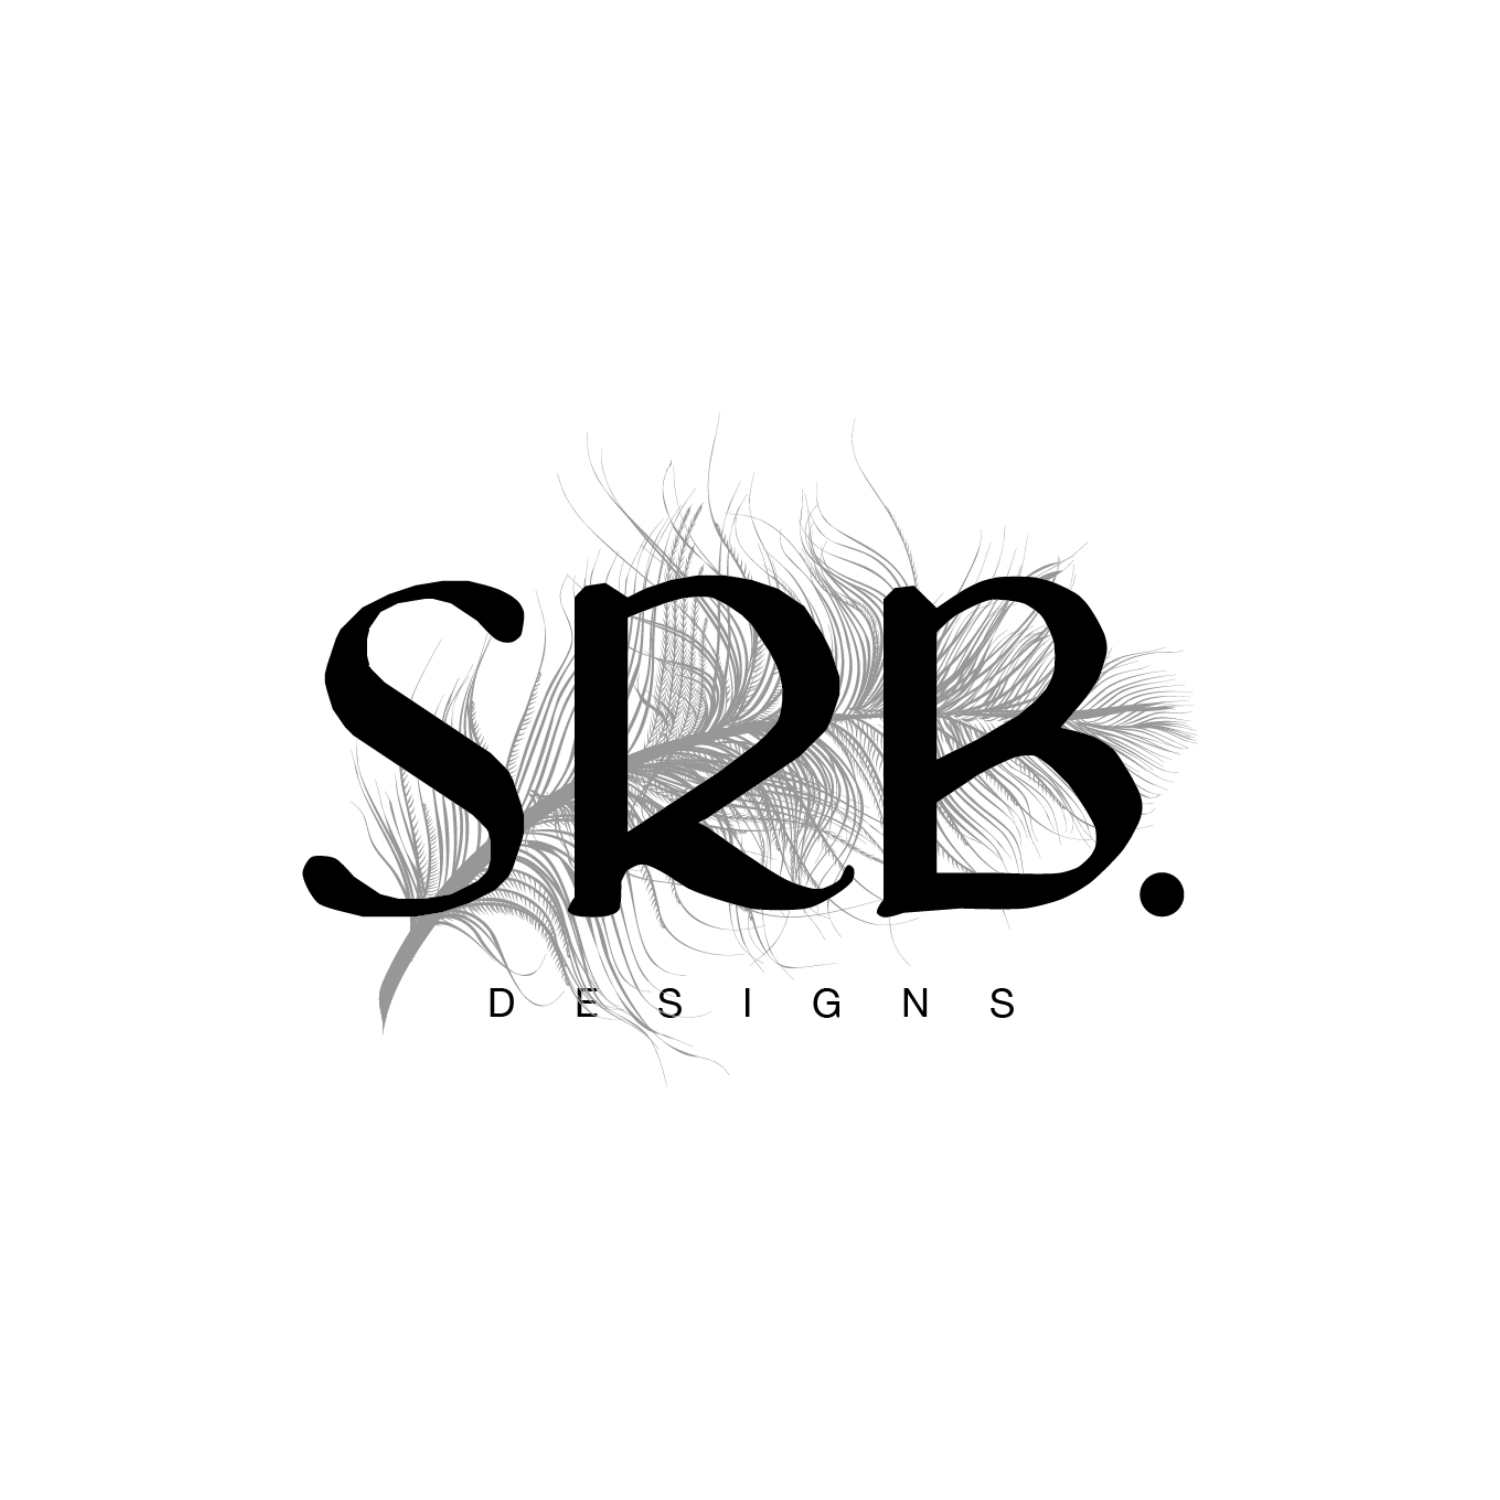 SRB Logo - LOGO SRB | LOGOS | Pinterest | Logos